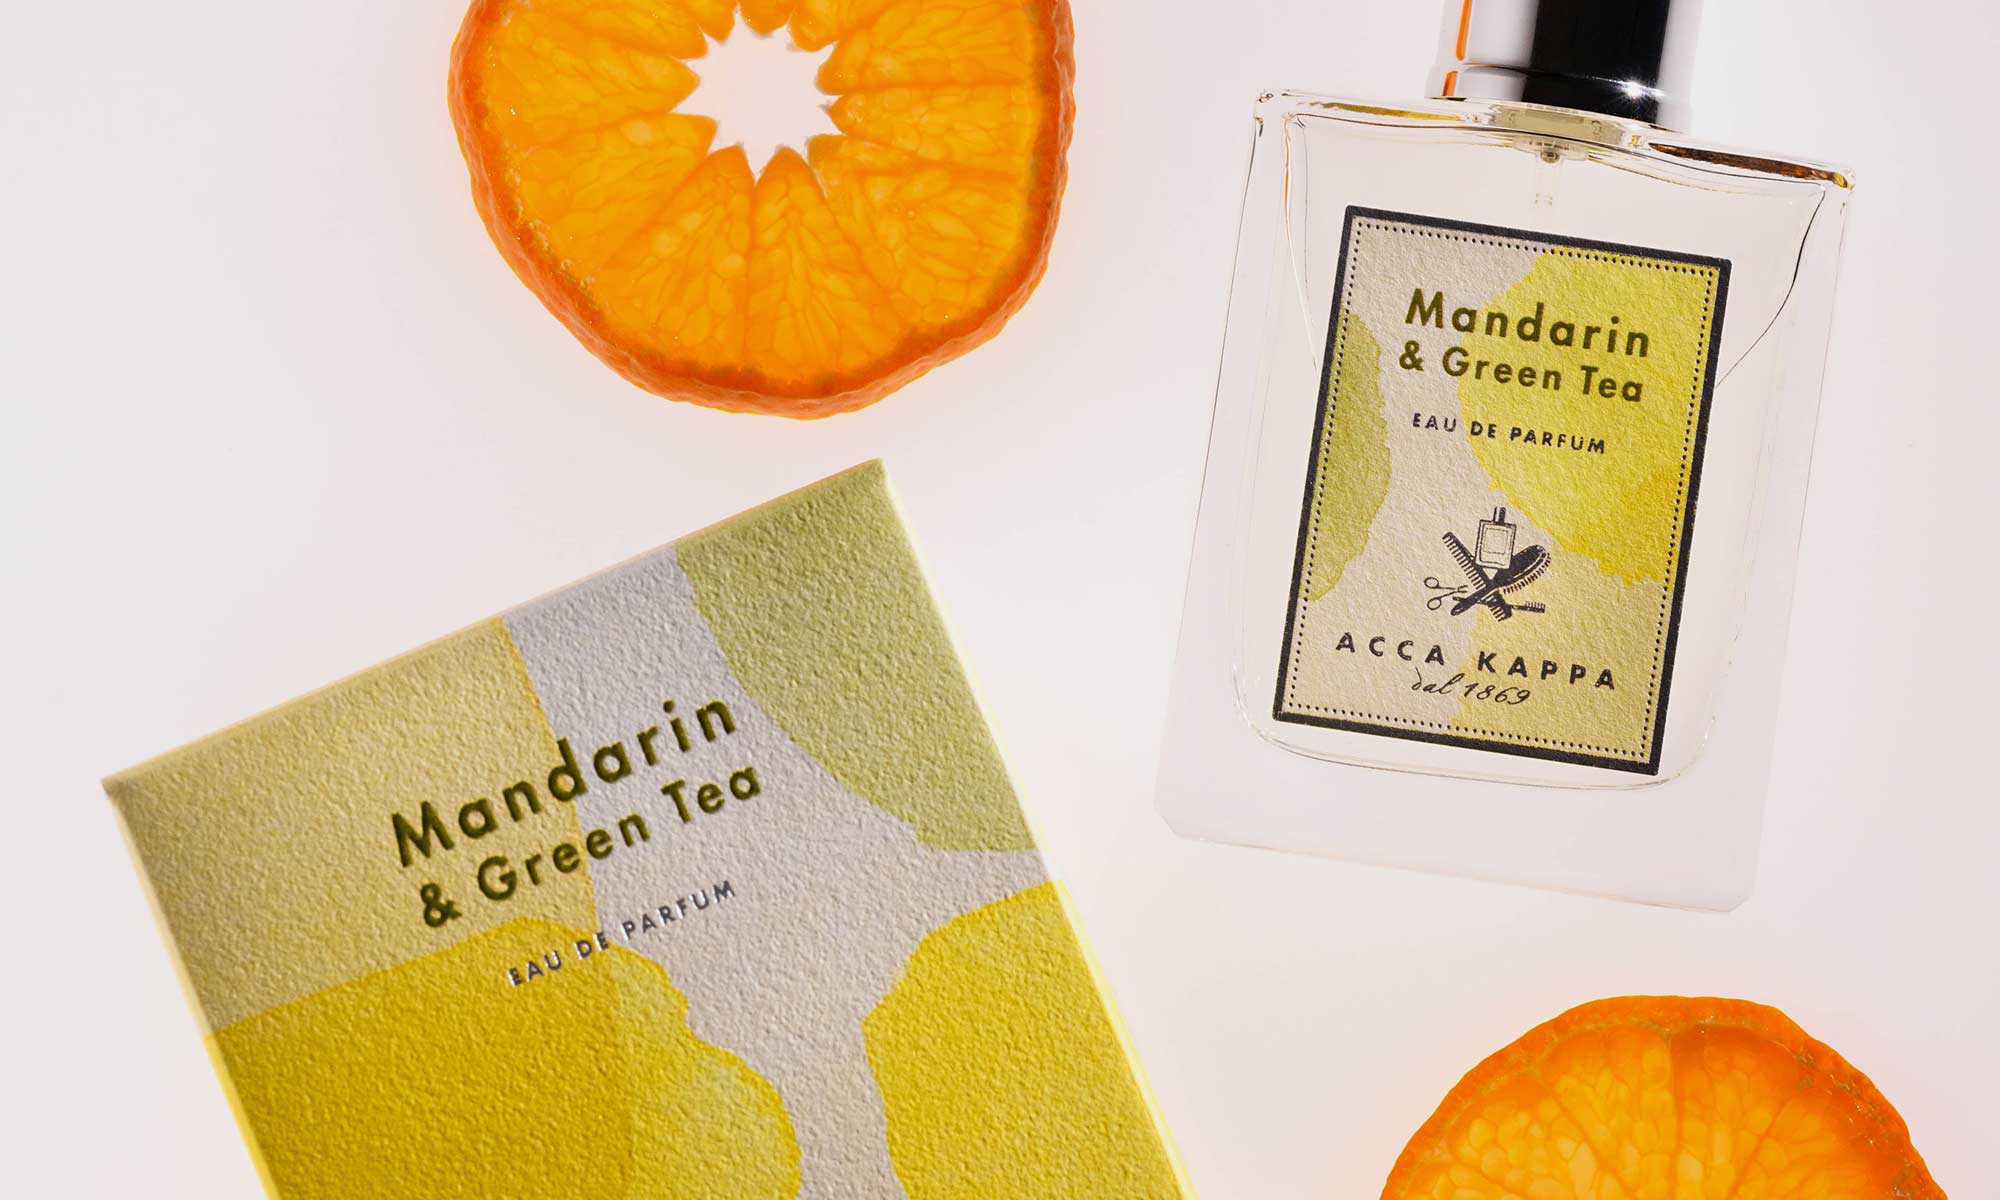 Mandarin & Green Tea Eau de Parfum